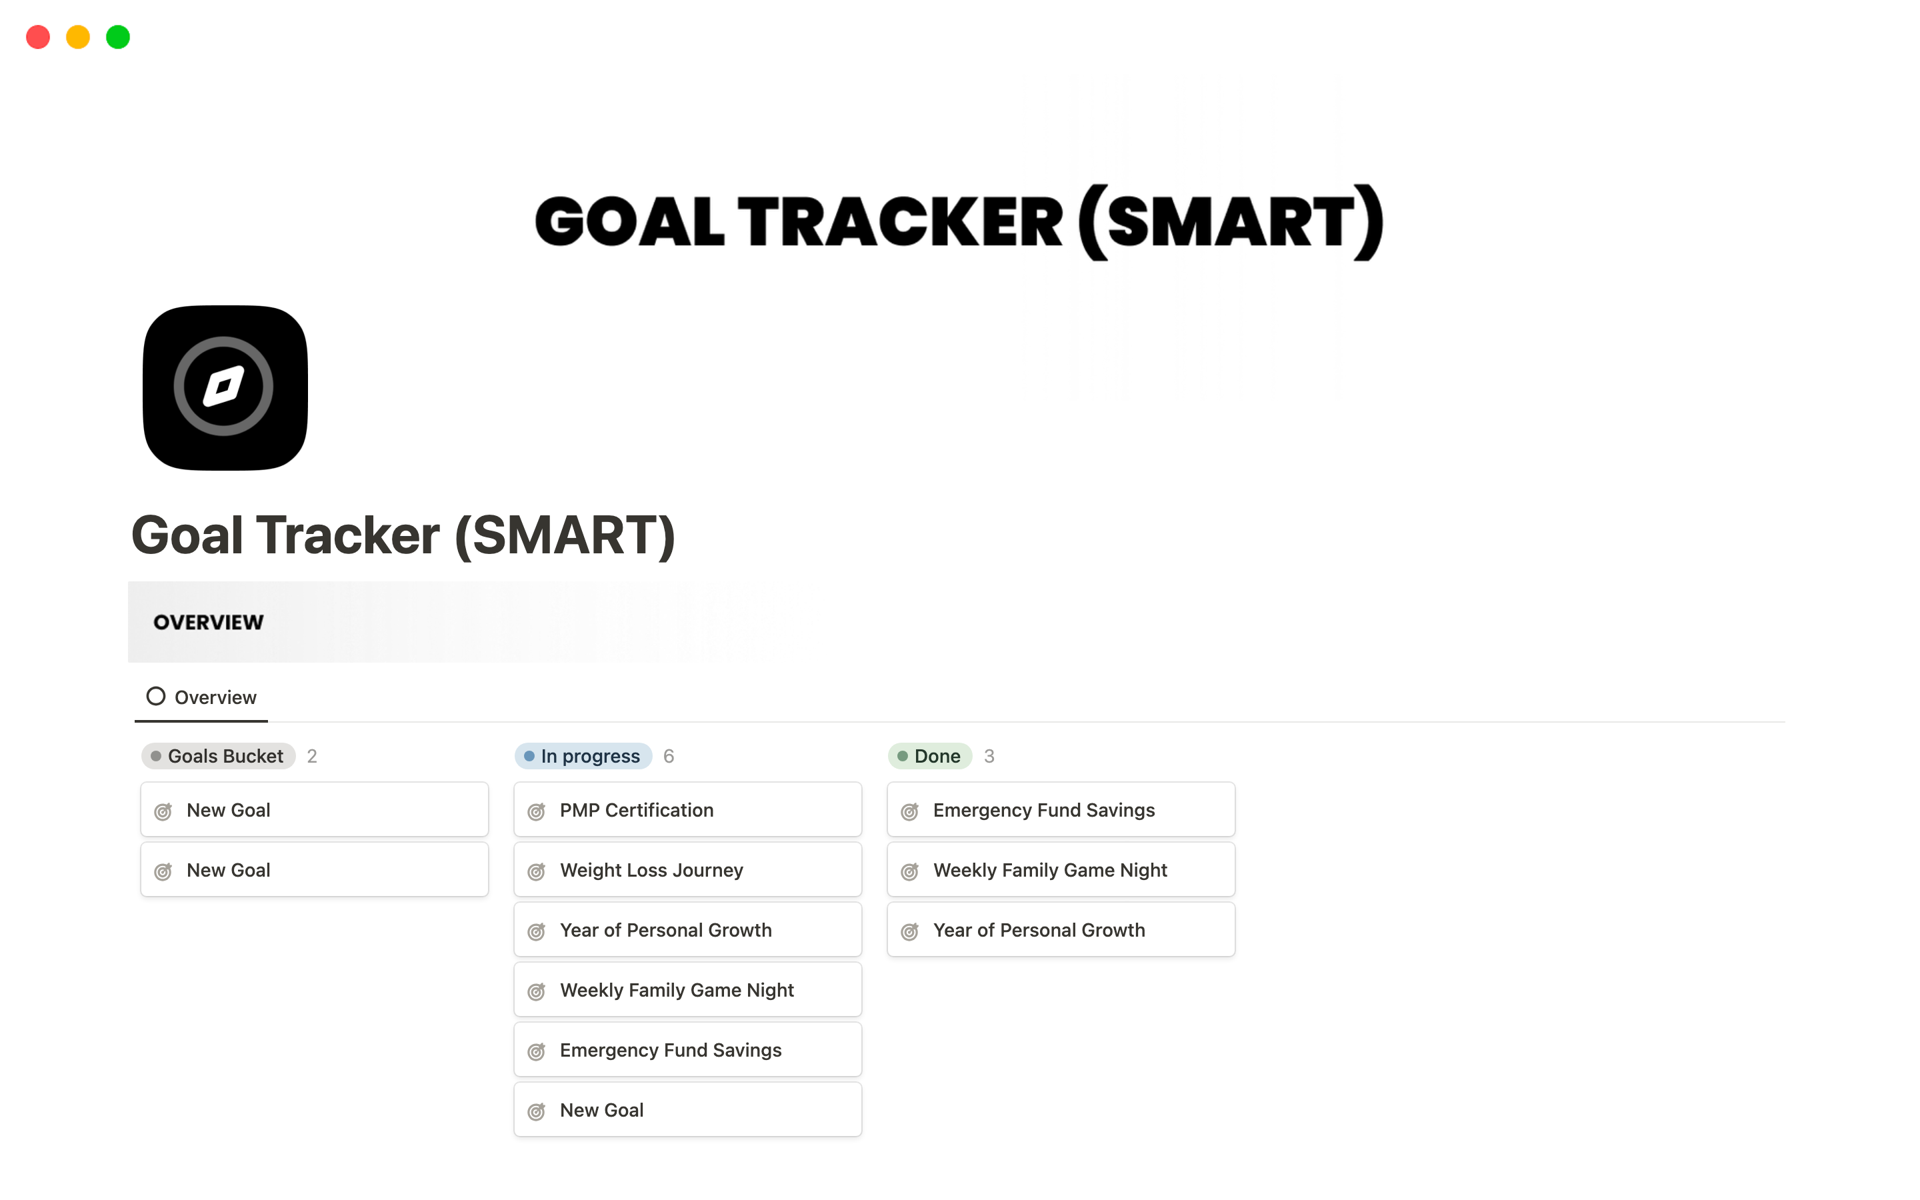 Vista previa de plantilla para Goal Tracker (SMART)